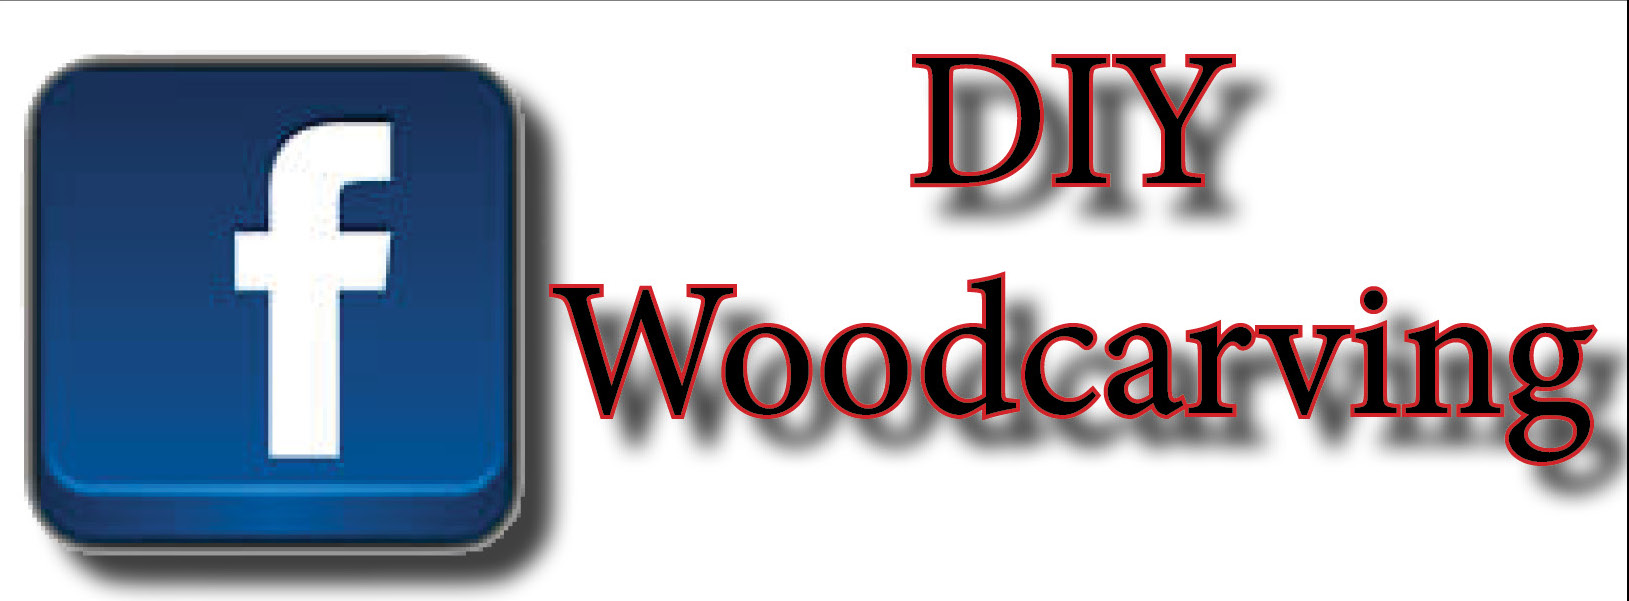 DIY Woodcarving Facebook page